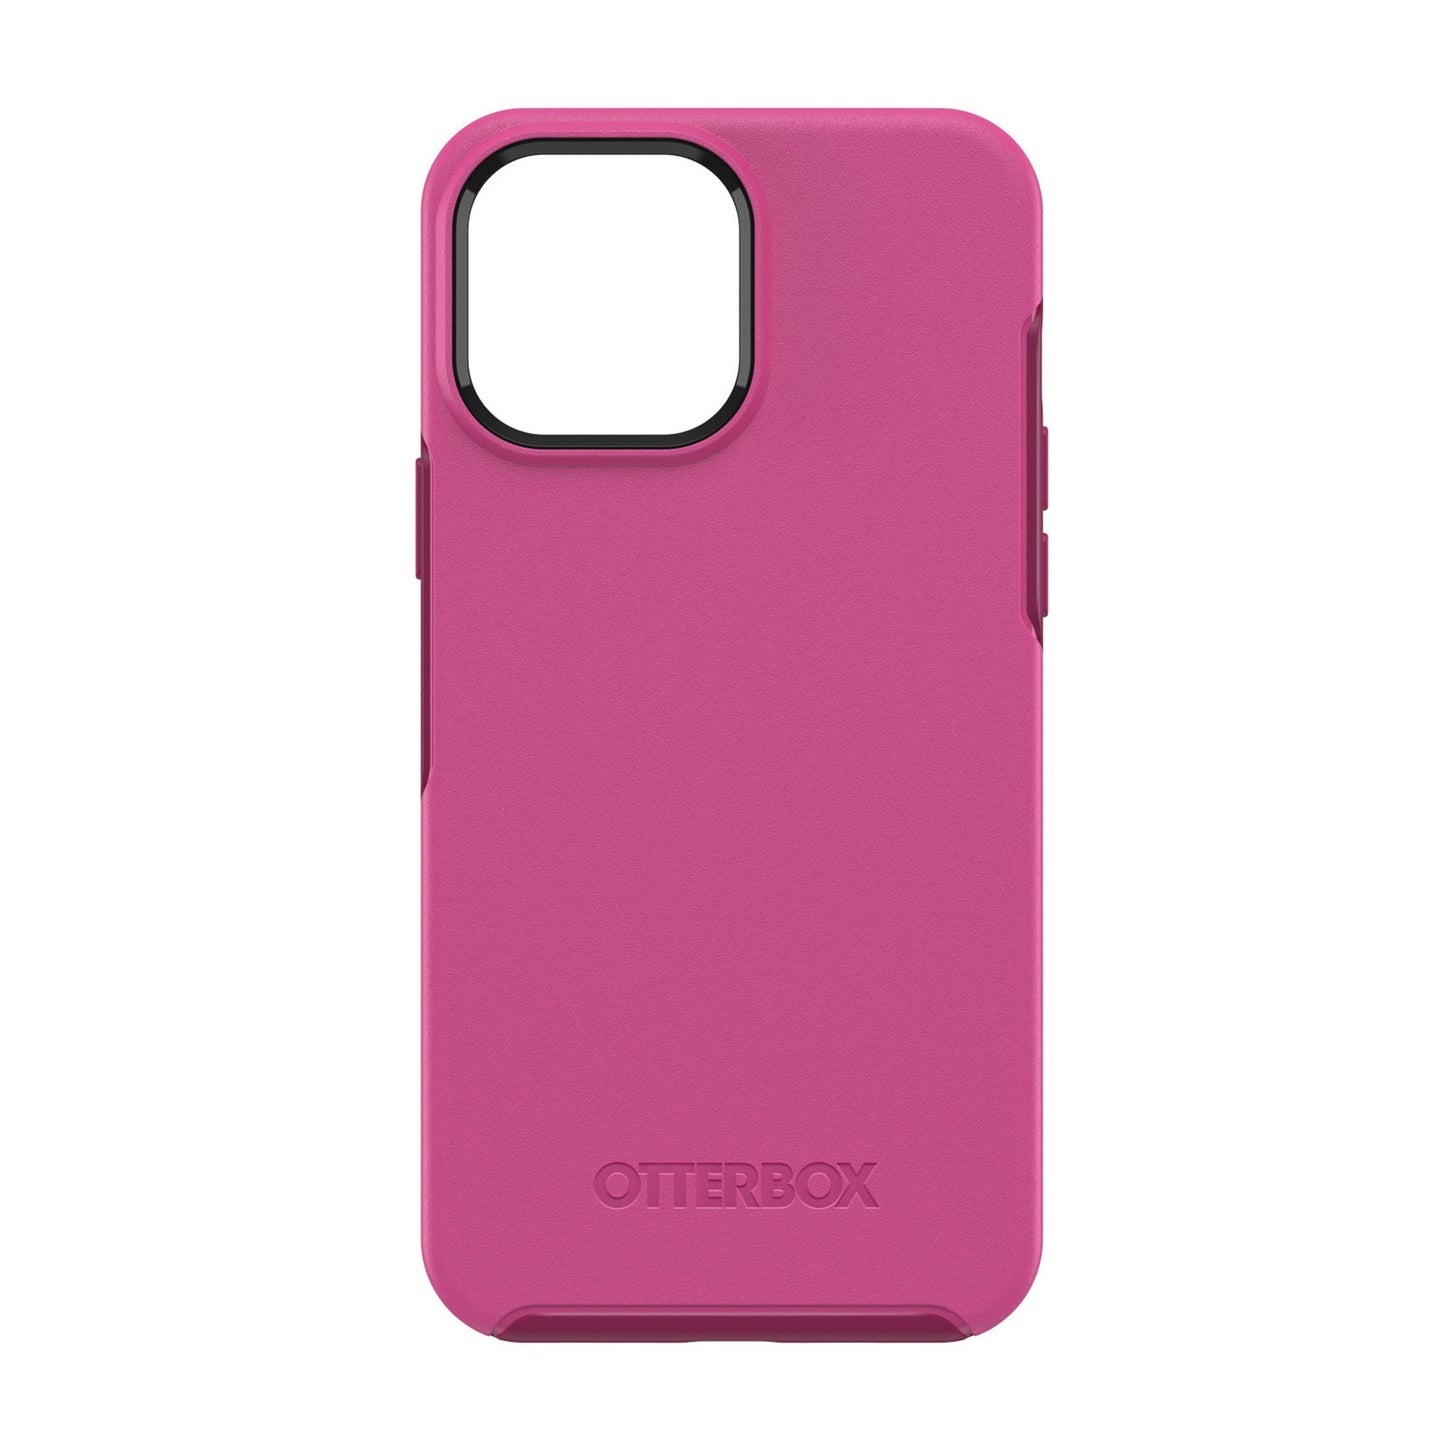 iPhone 13 Pro Max/12 Pro Max Otterbox Symmetry Series Case - Pink (Renaissance Pink) - 15-09211